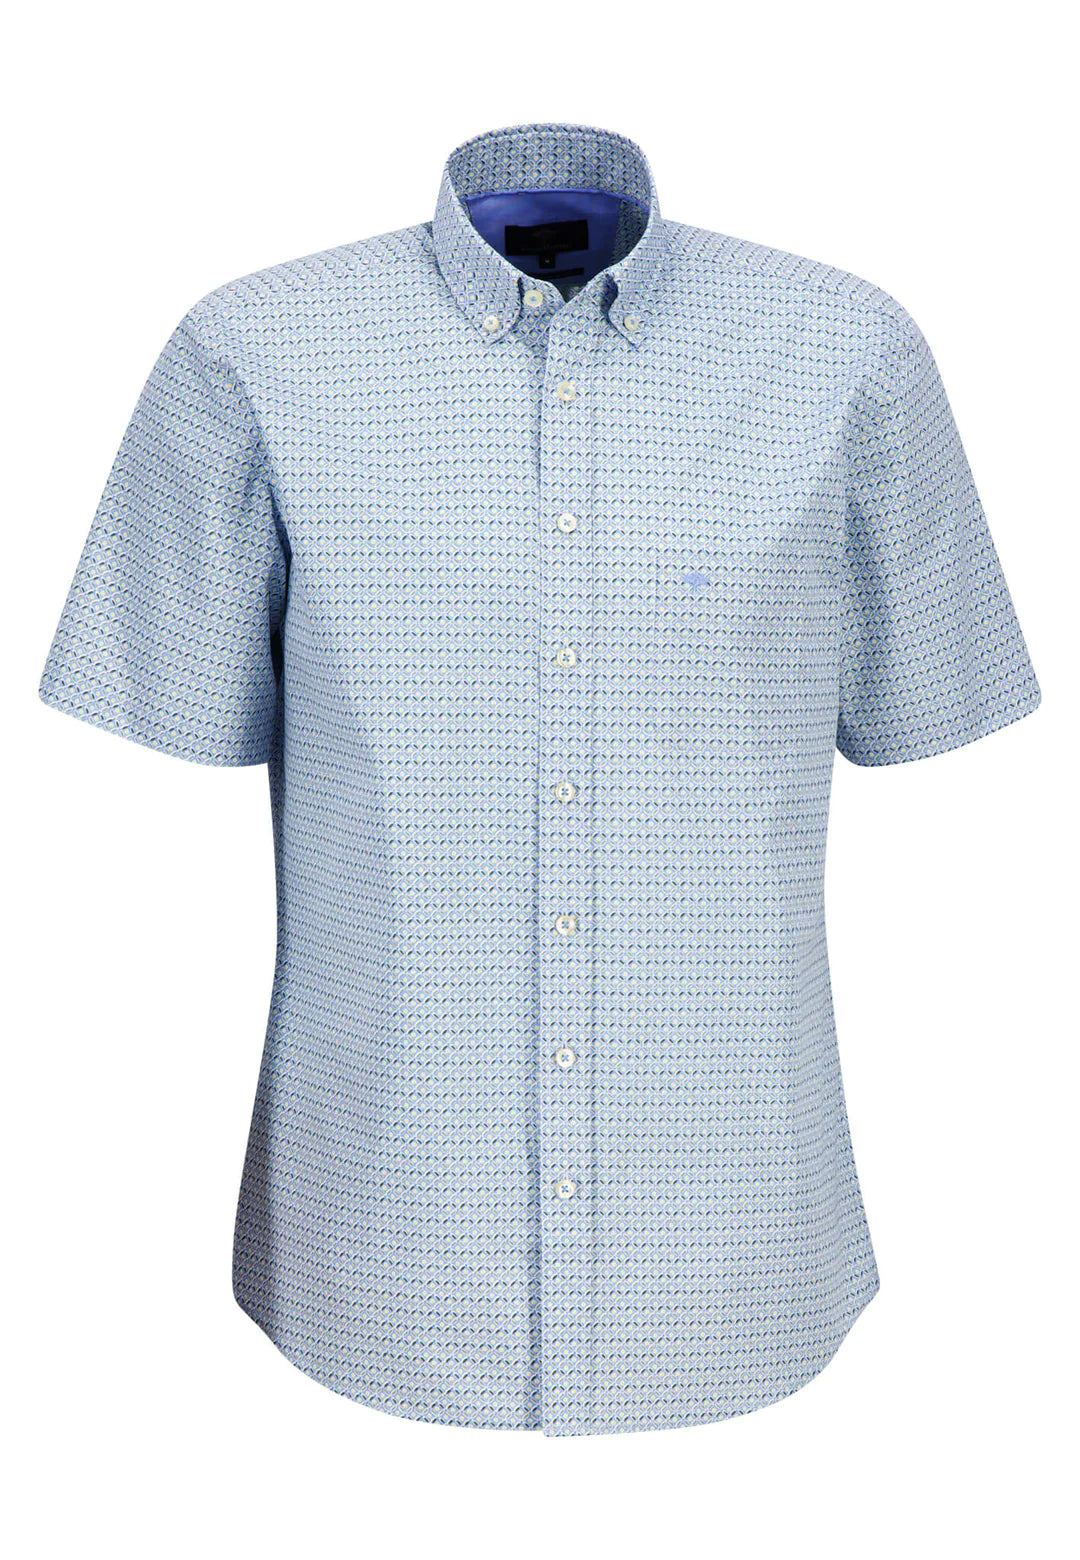 Fynch Hatton Pattern Short Sleeve Shirt - Light Sky